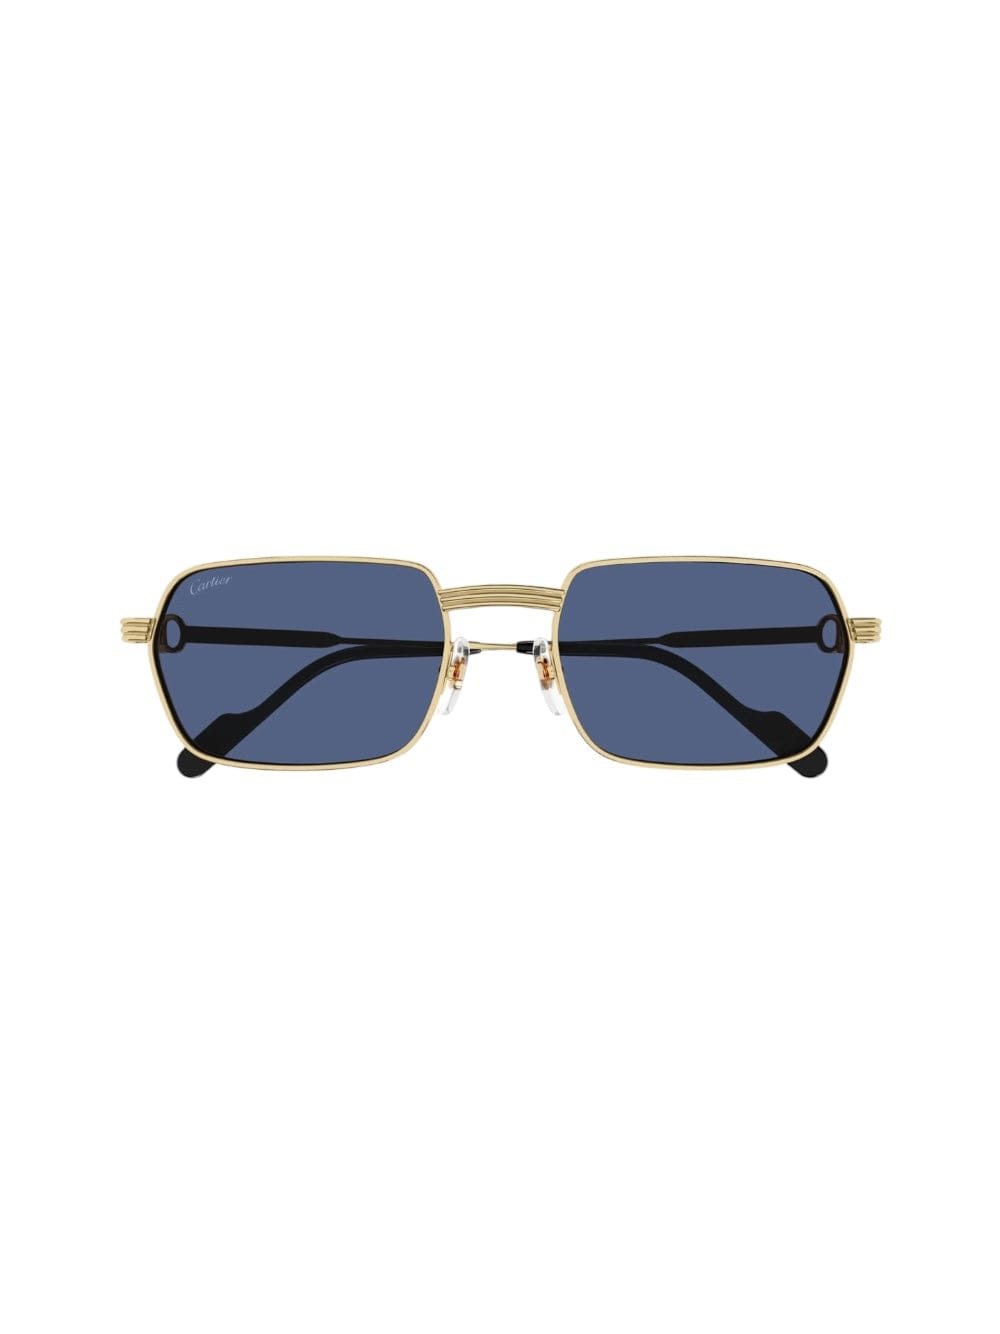 Ct 0463 - Gold Sunglasses